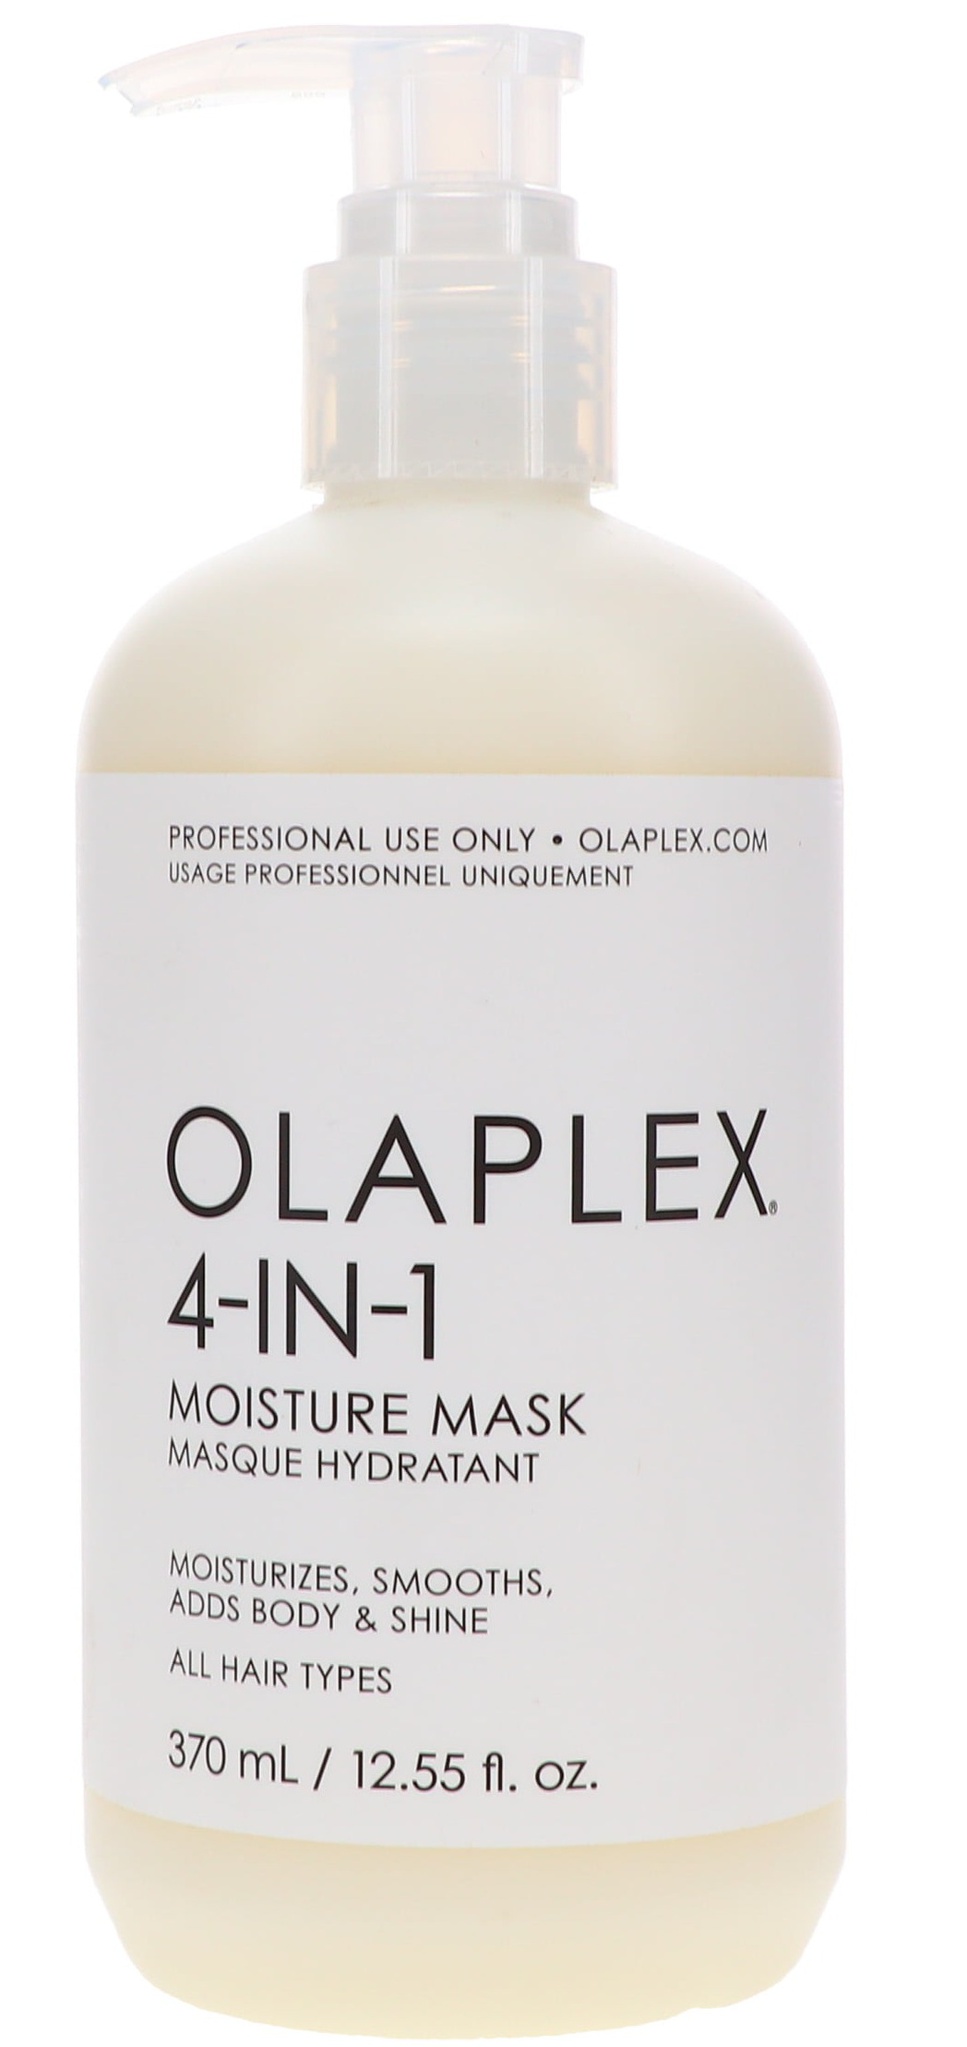 Olaplex 4-in-1 Moisture Mask